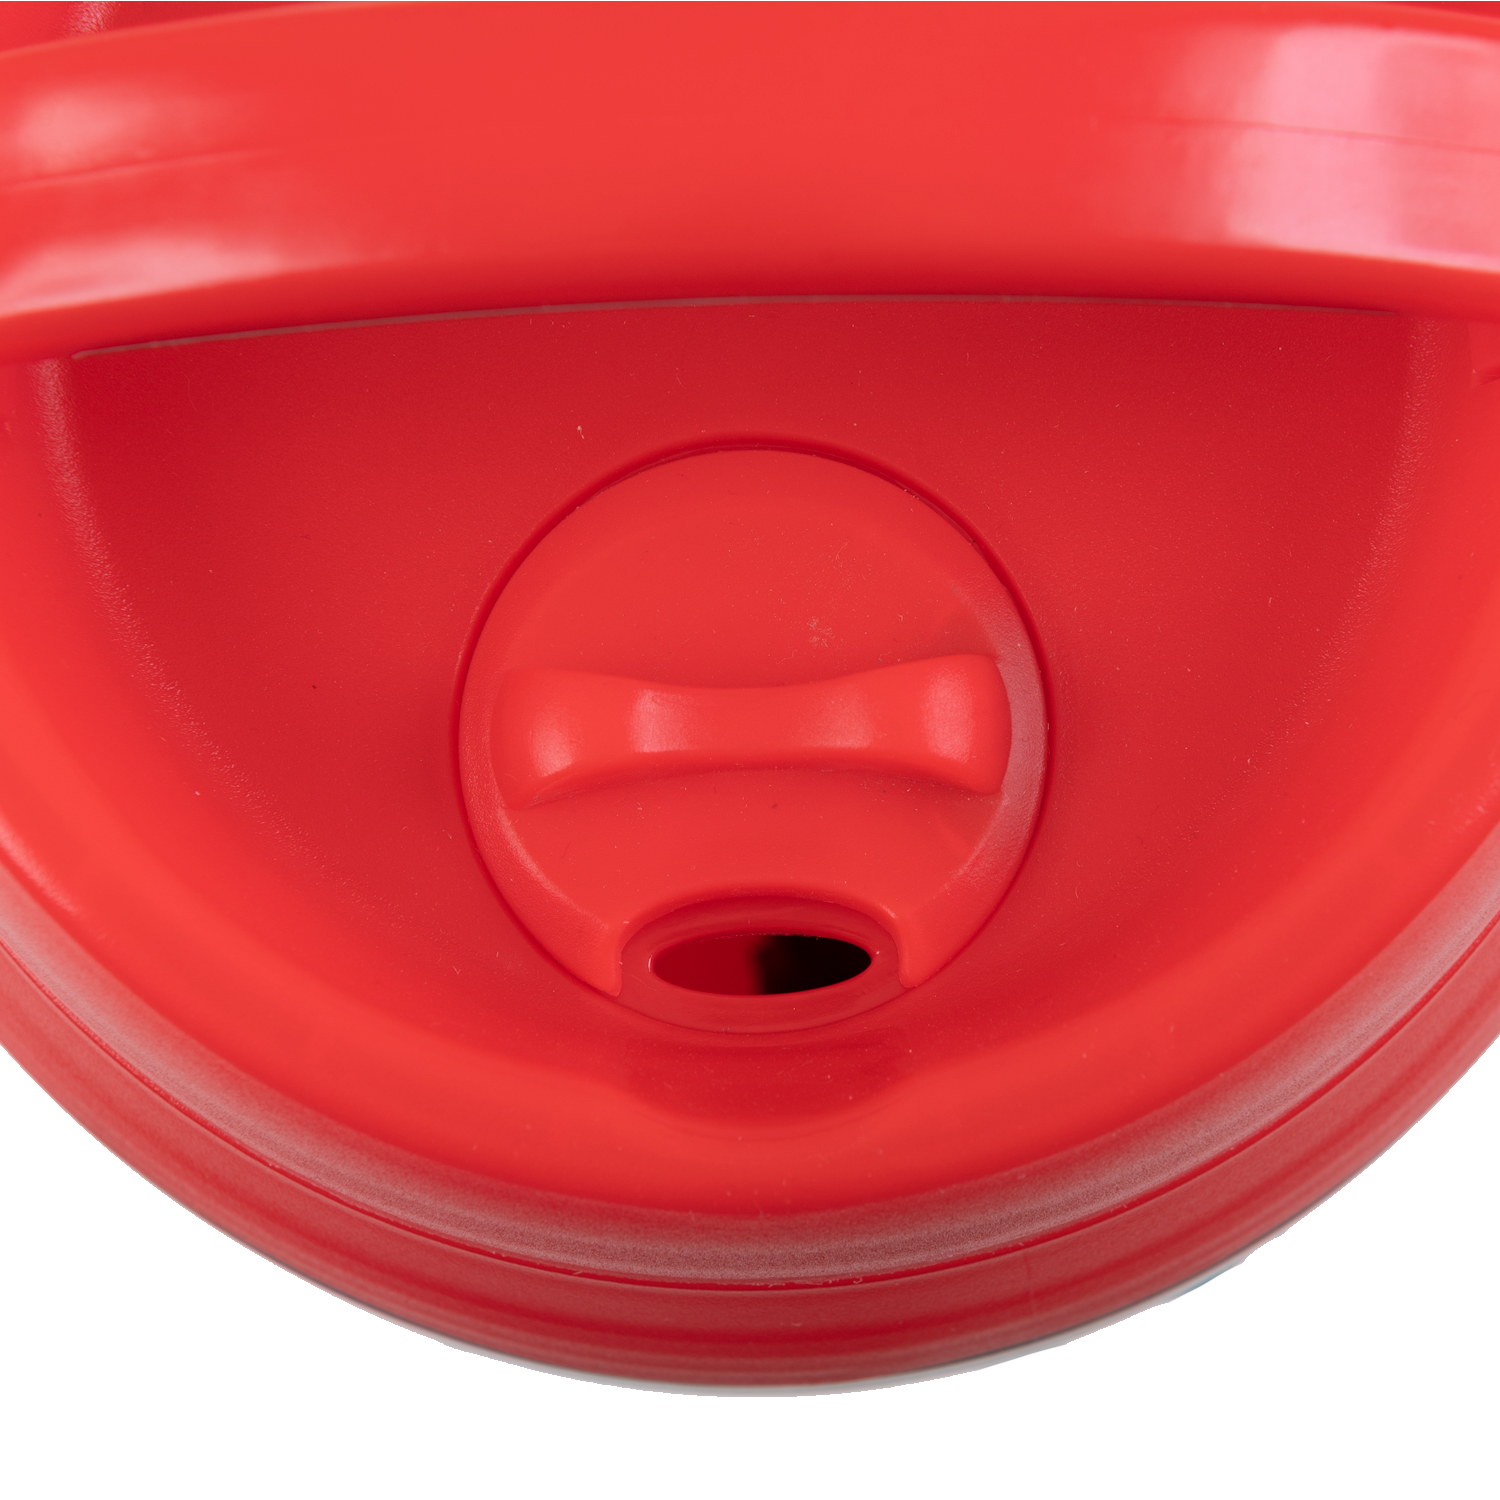 World Famous - Mega barrel mug, 128 oz. Colour: red | Rossy